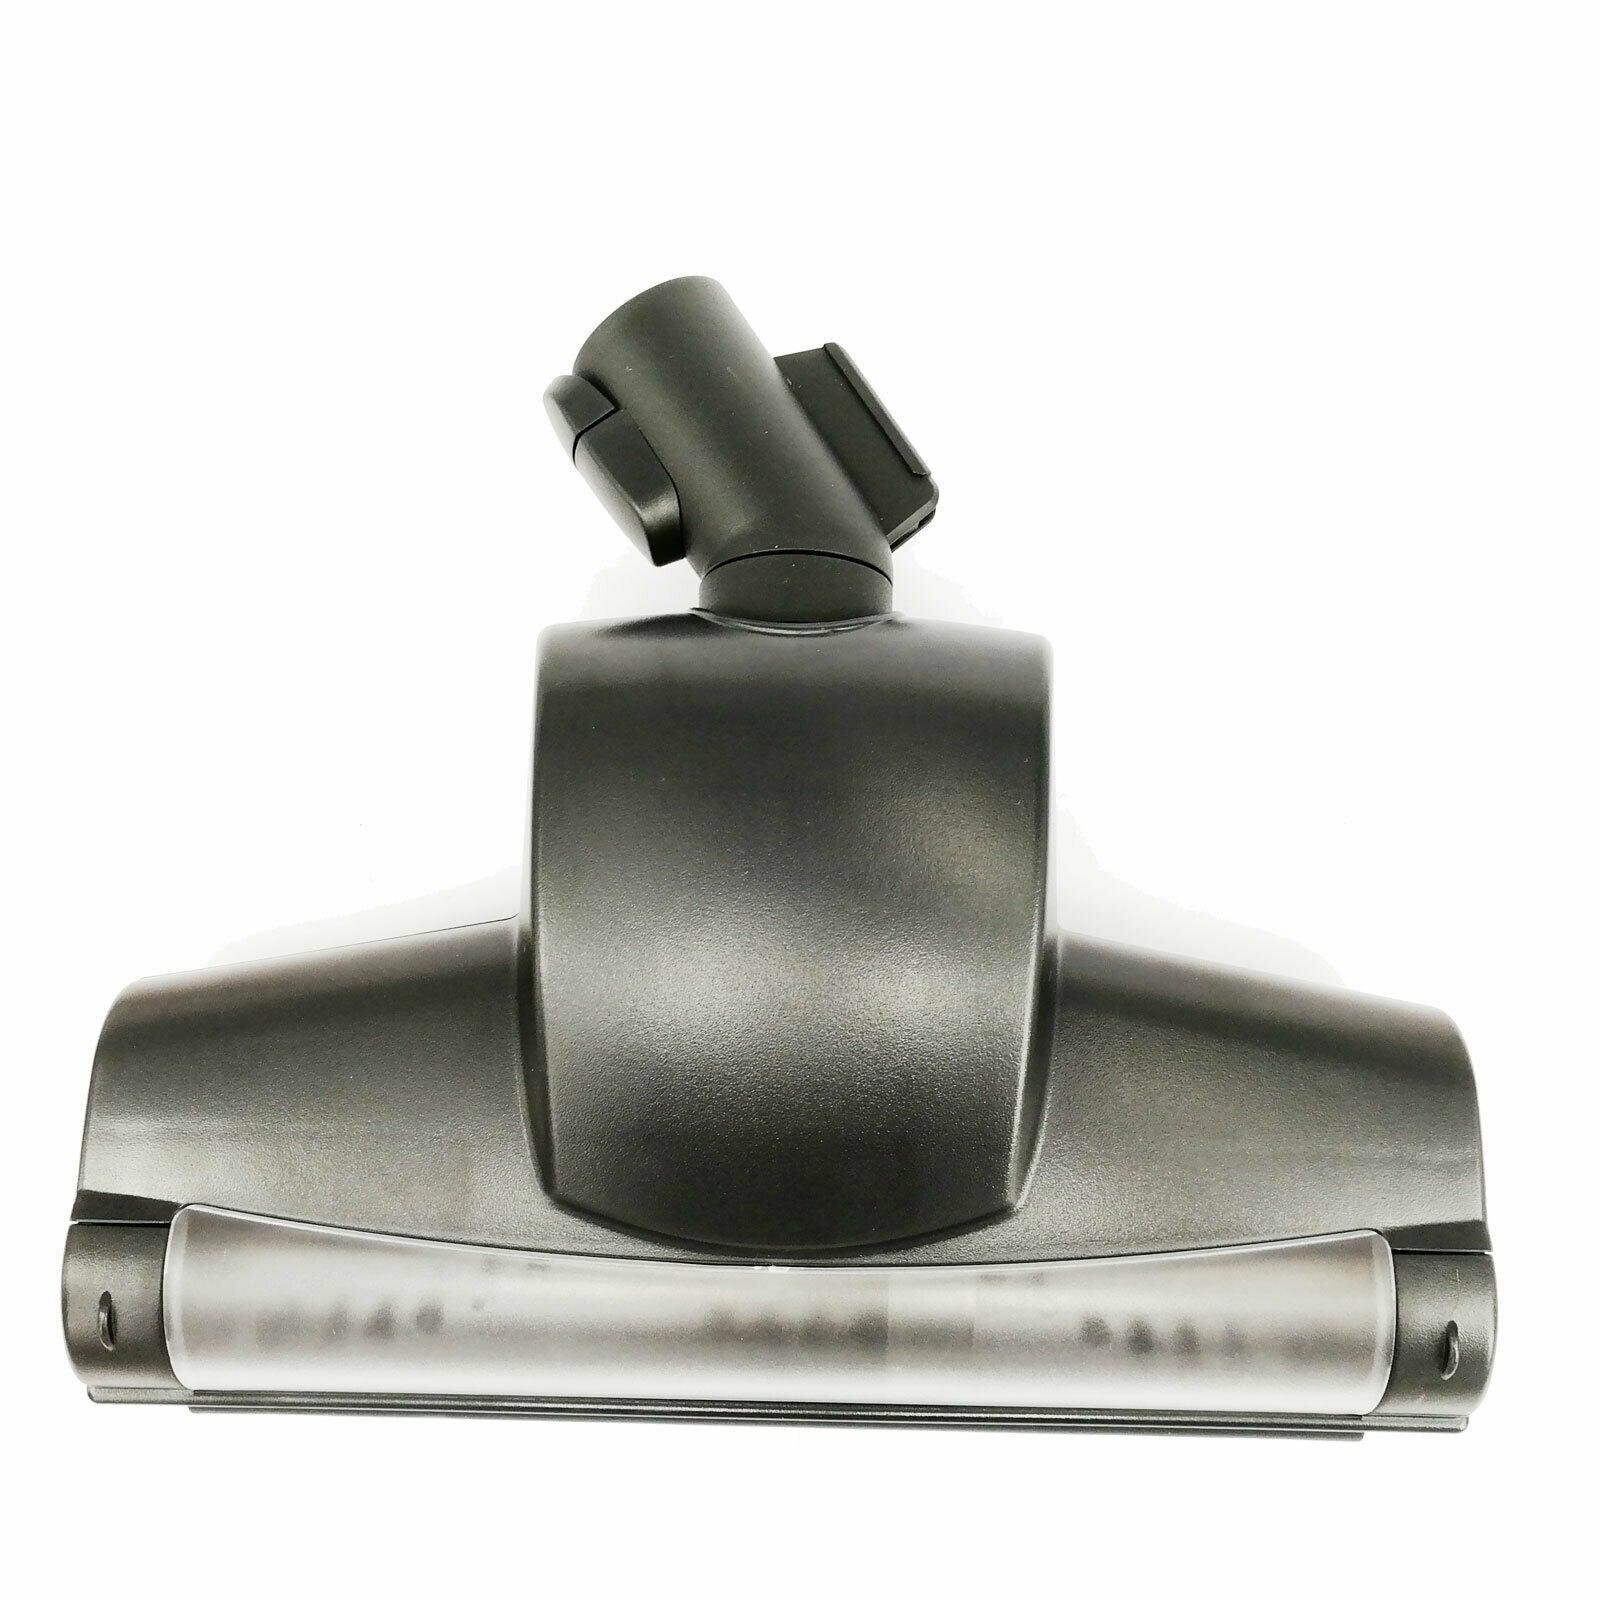 Interlock Turbo Floor Head Nozzle For Miele S8310 S8320 S8330 S8840 S7510 S7580 Sparesbarn